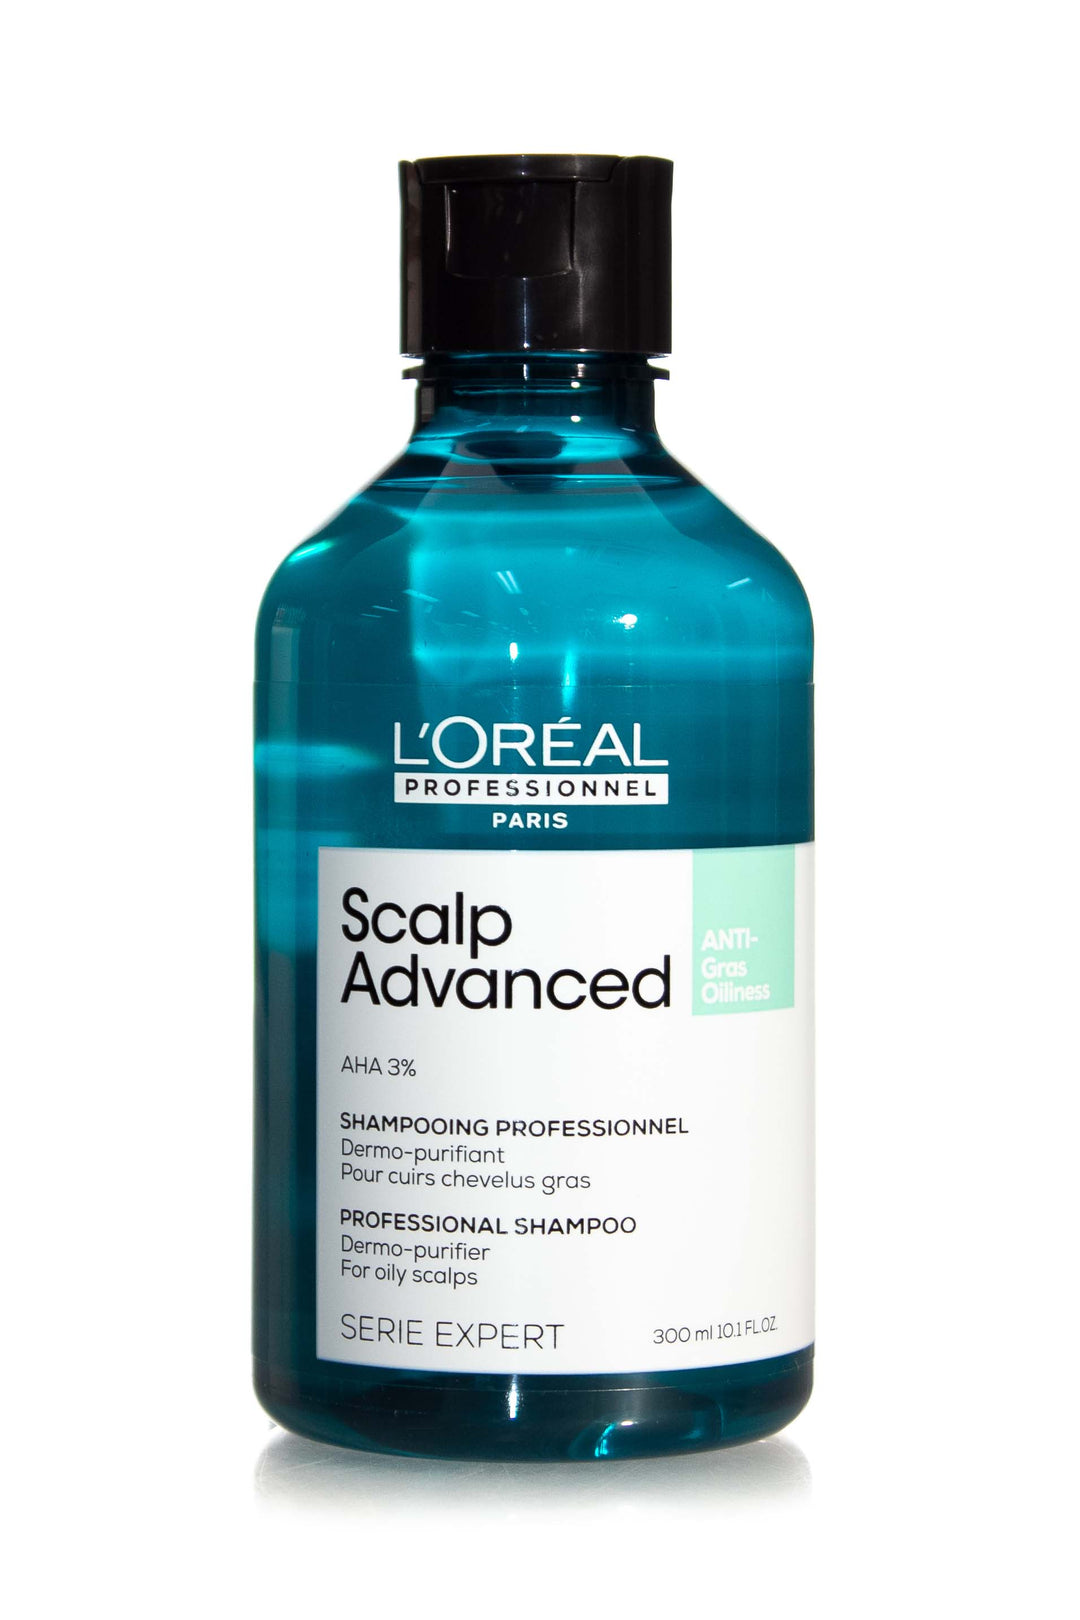 L'Oreal Scalp Advanced Anti-Oiliness Shampoo